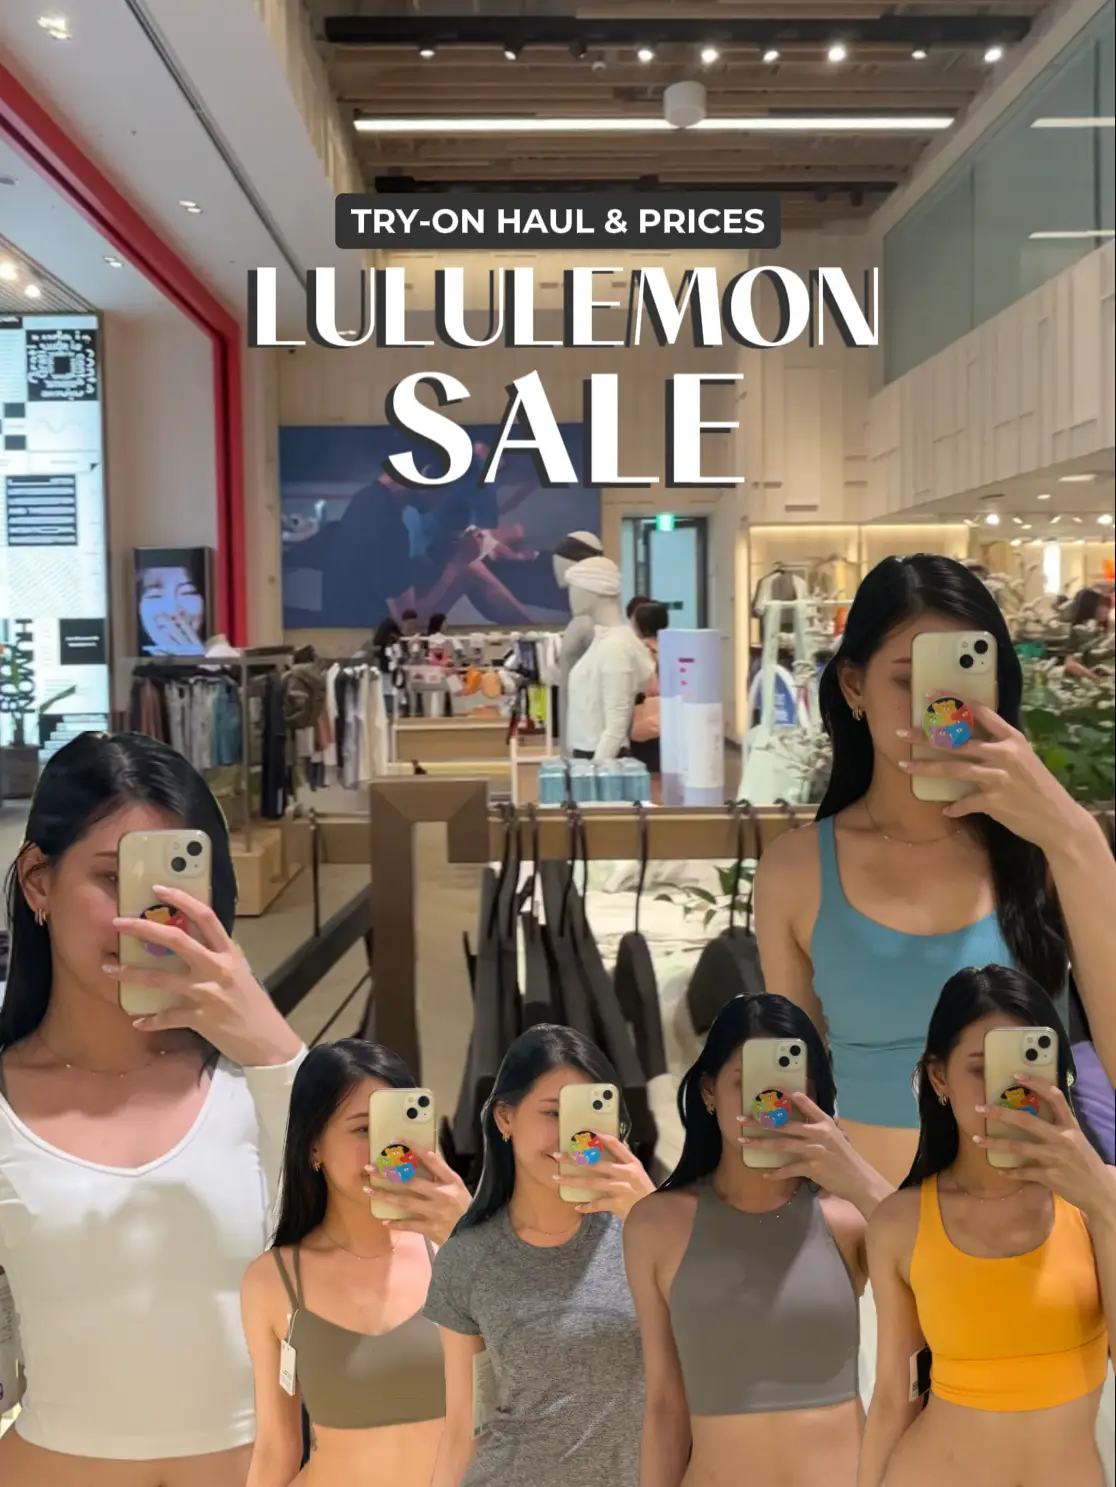 Lululemon Pictures  Download Free Images on Unsplash